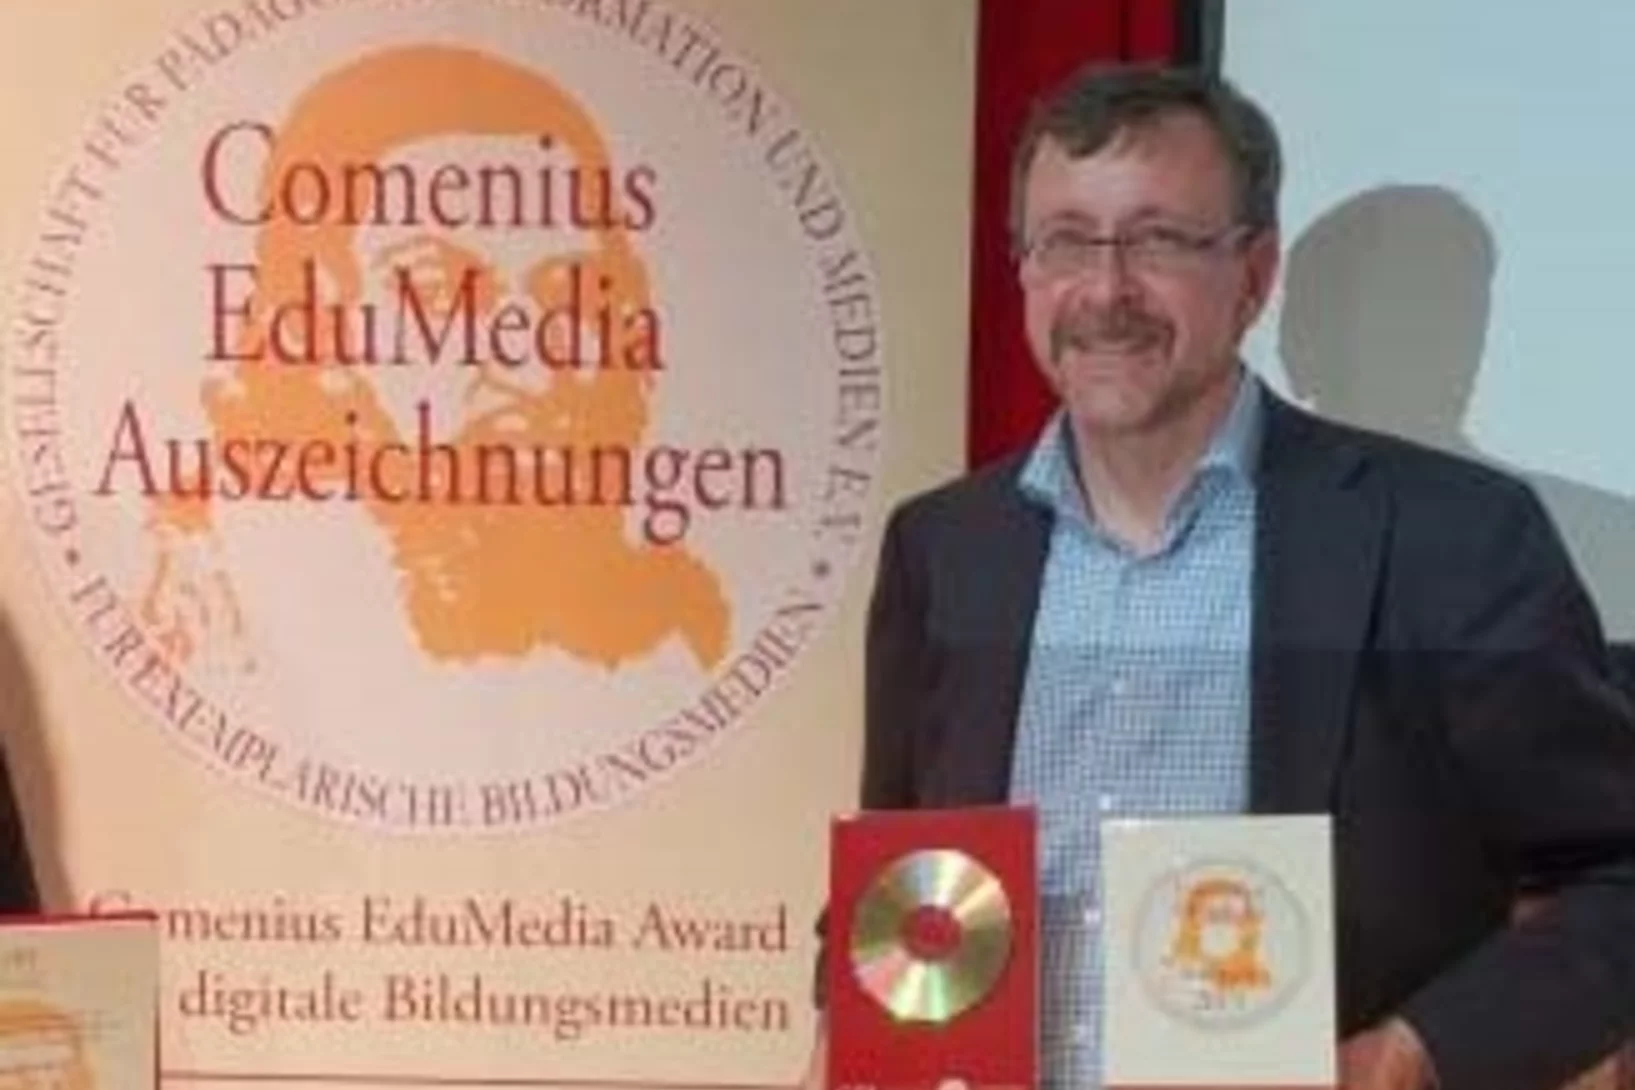 Helmut Schift, Comenius Award winner